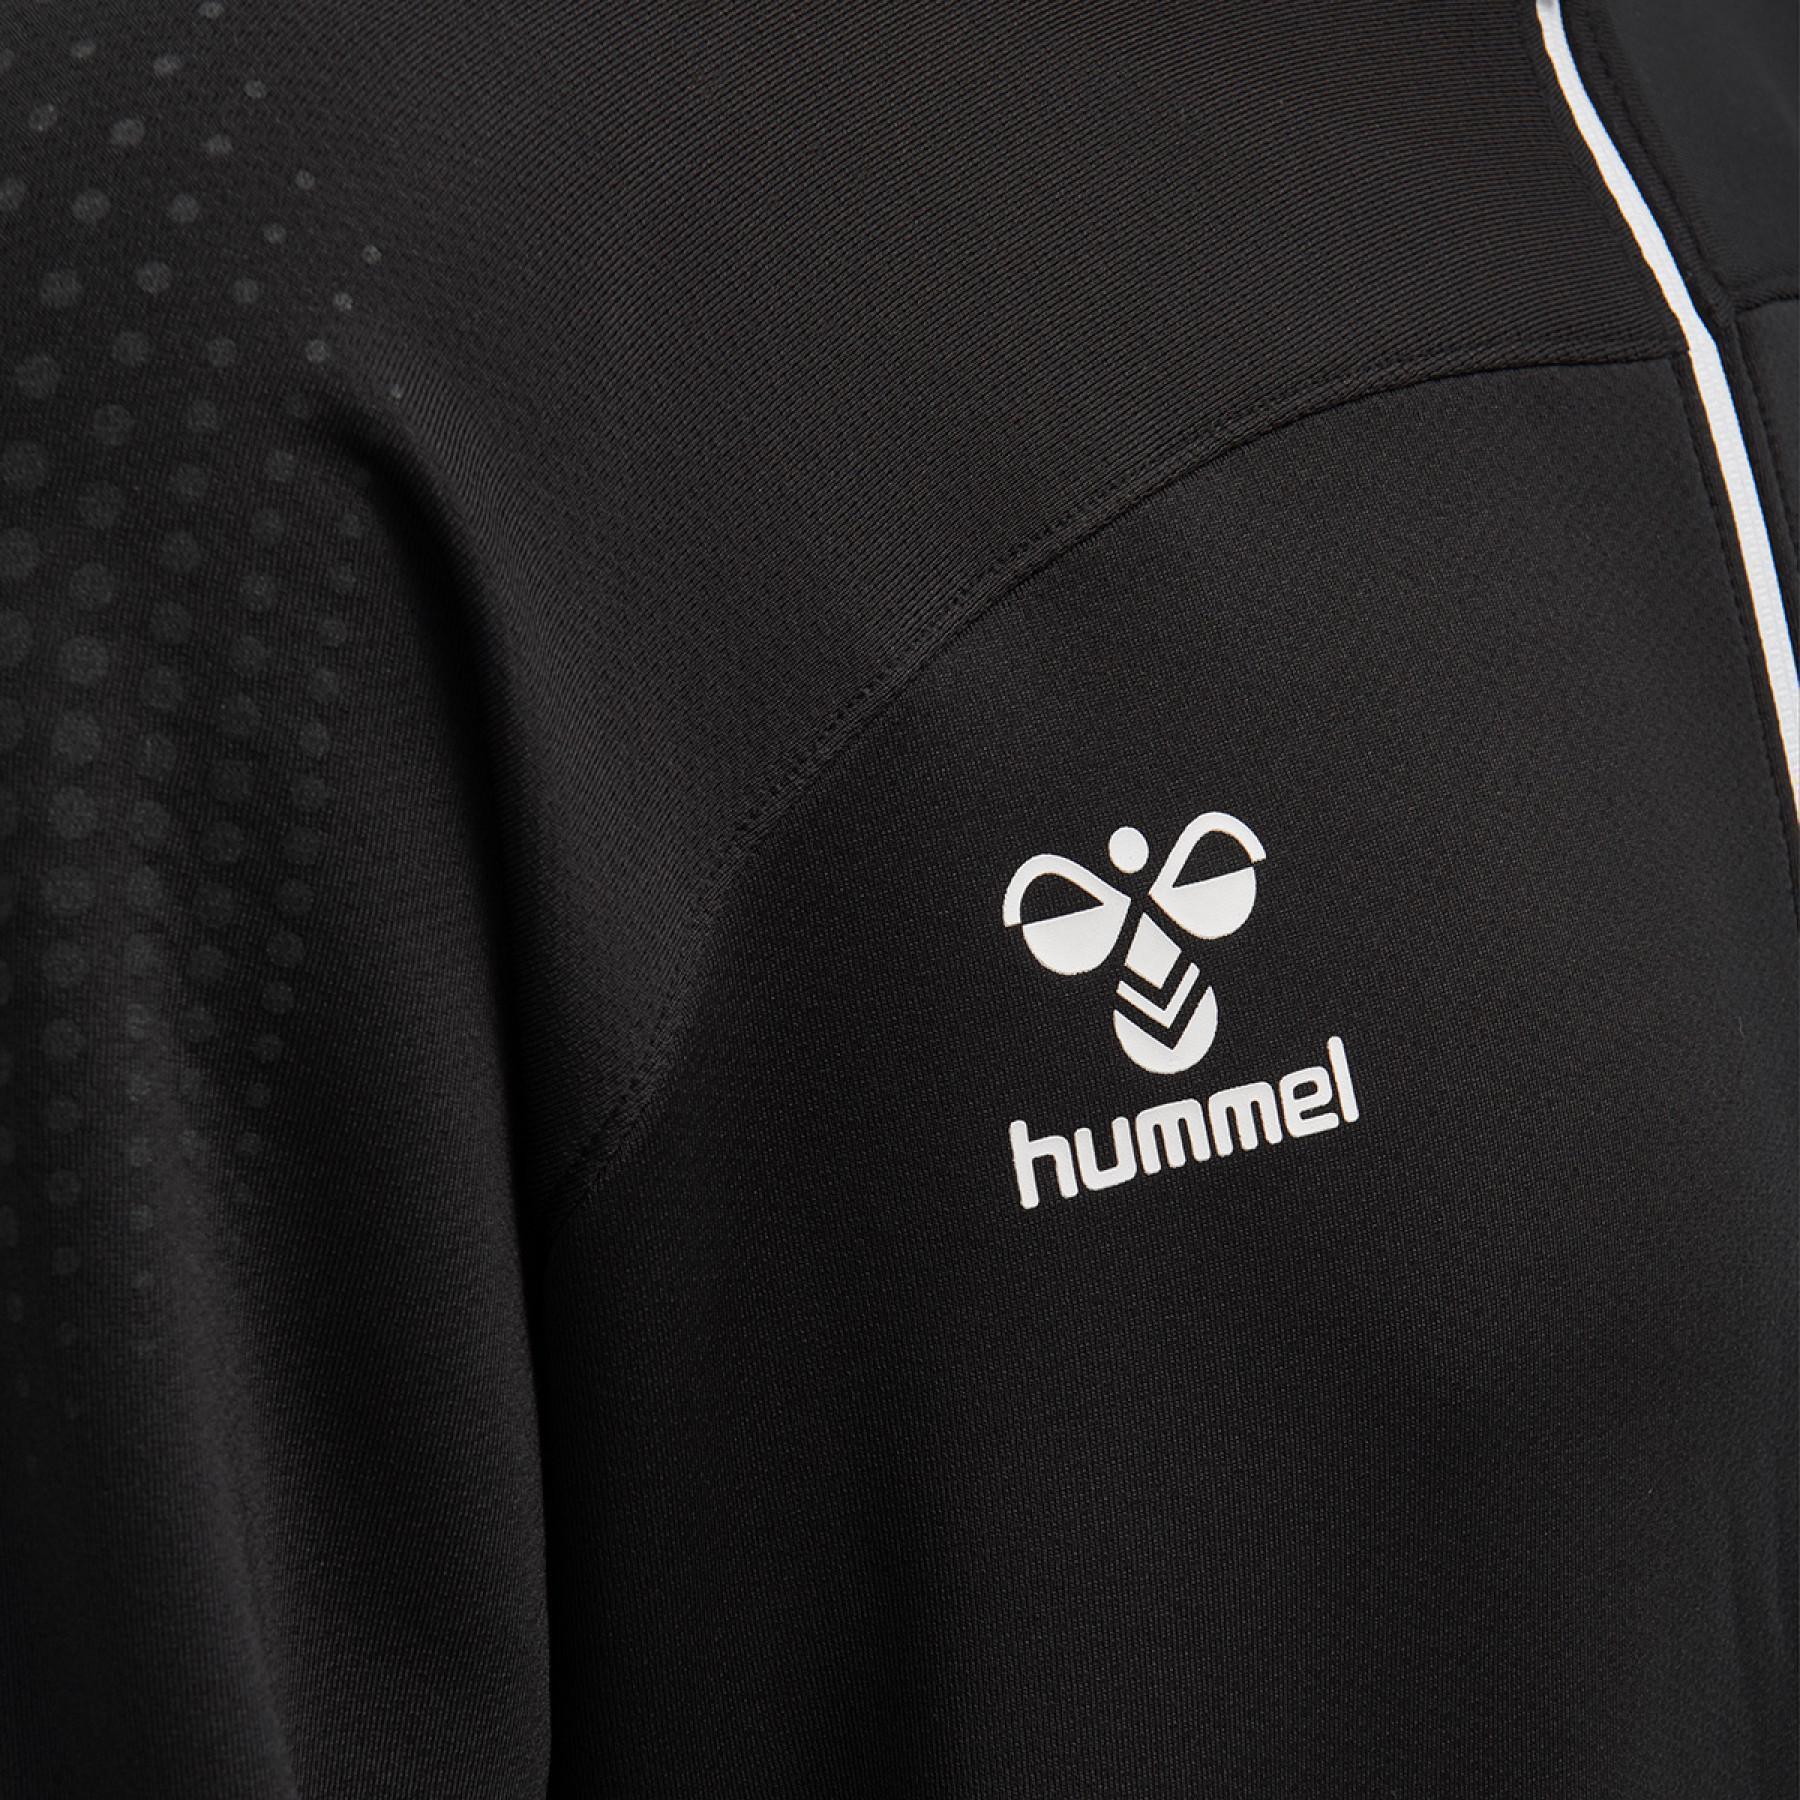 Zipped jacket Hummel hmllead poly - Hummel - Brands - Handball wear